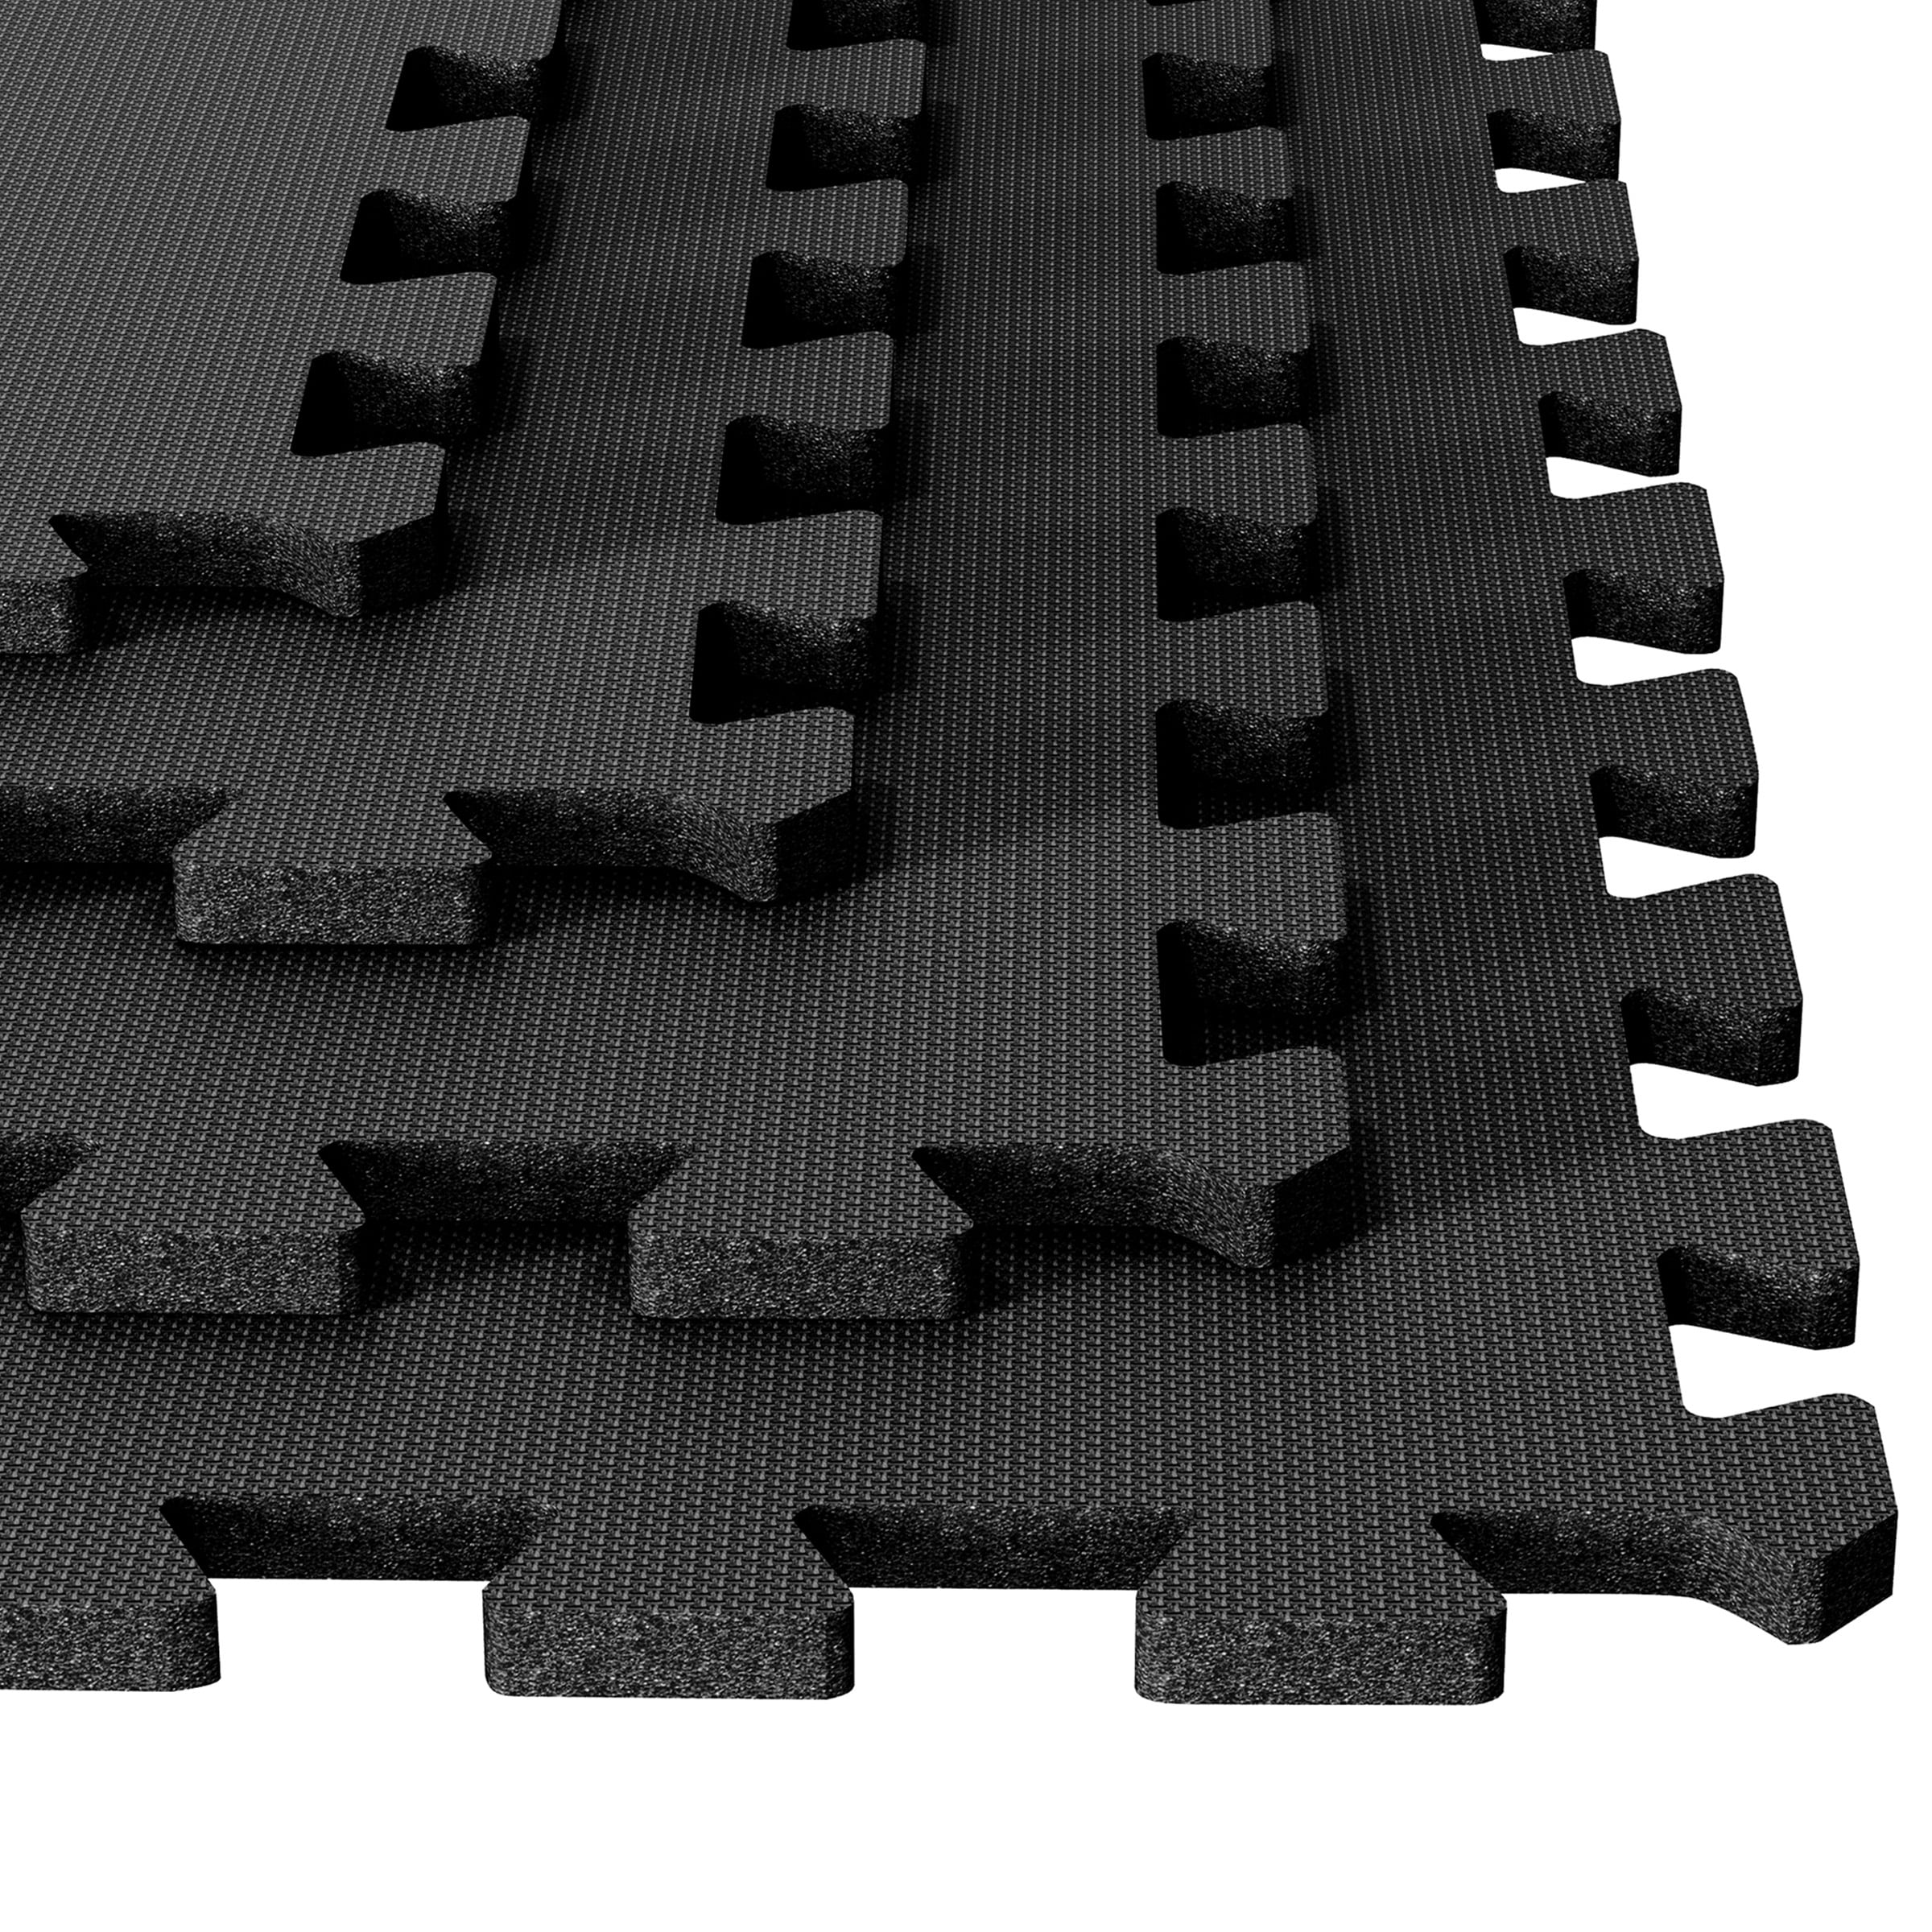 Stalwart Black 24 in. x 24 in. x 0.375 in. Interlocking EVA Foam